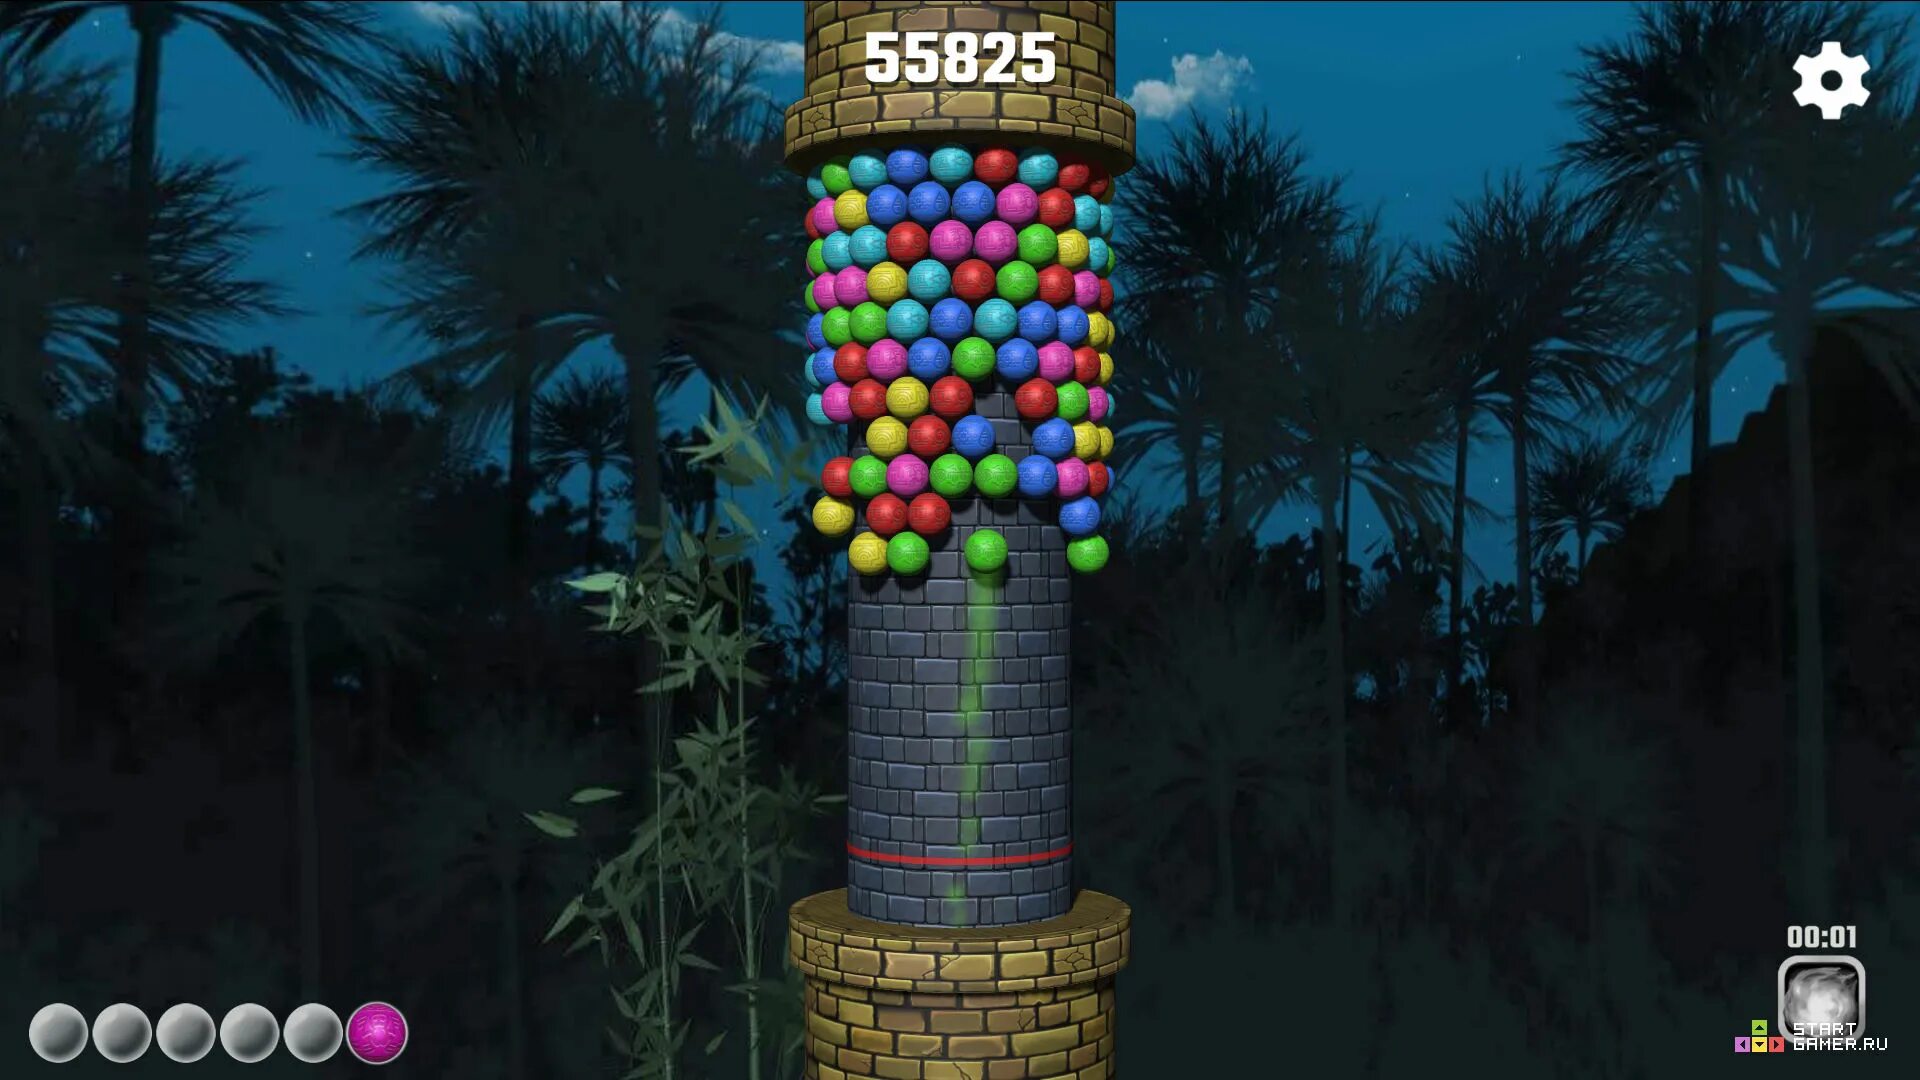 Шарики стрелялки башня играть. Башни стреляют шариками в игре. Башня шариков игра. Игра башня шариковая 3д. Башенки с шариками.